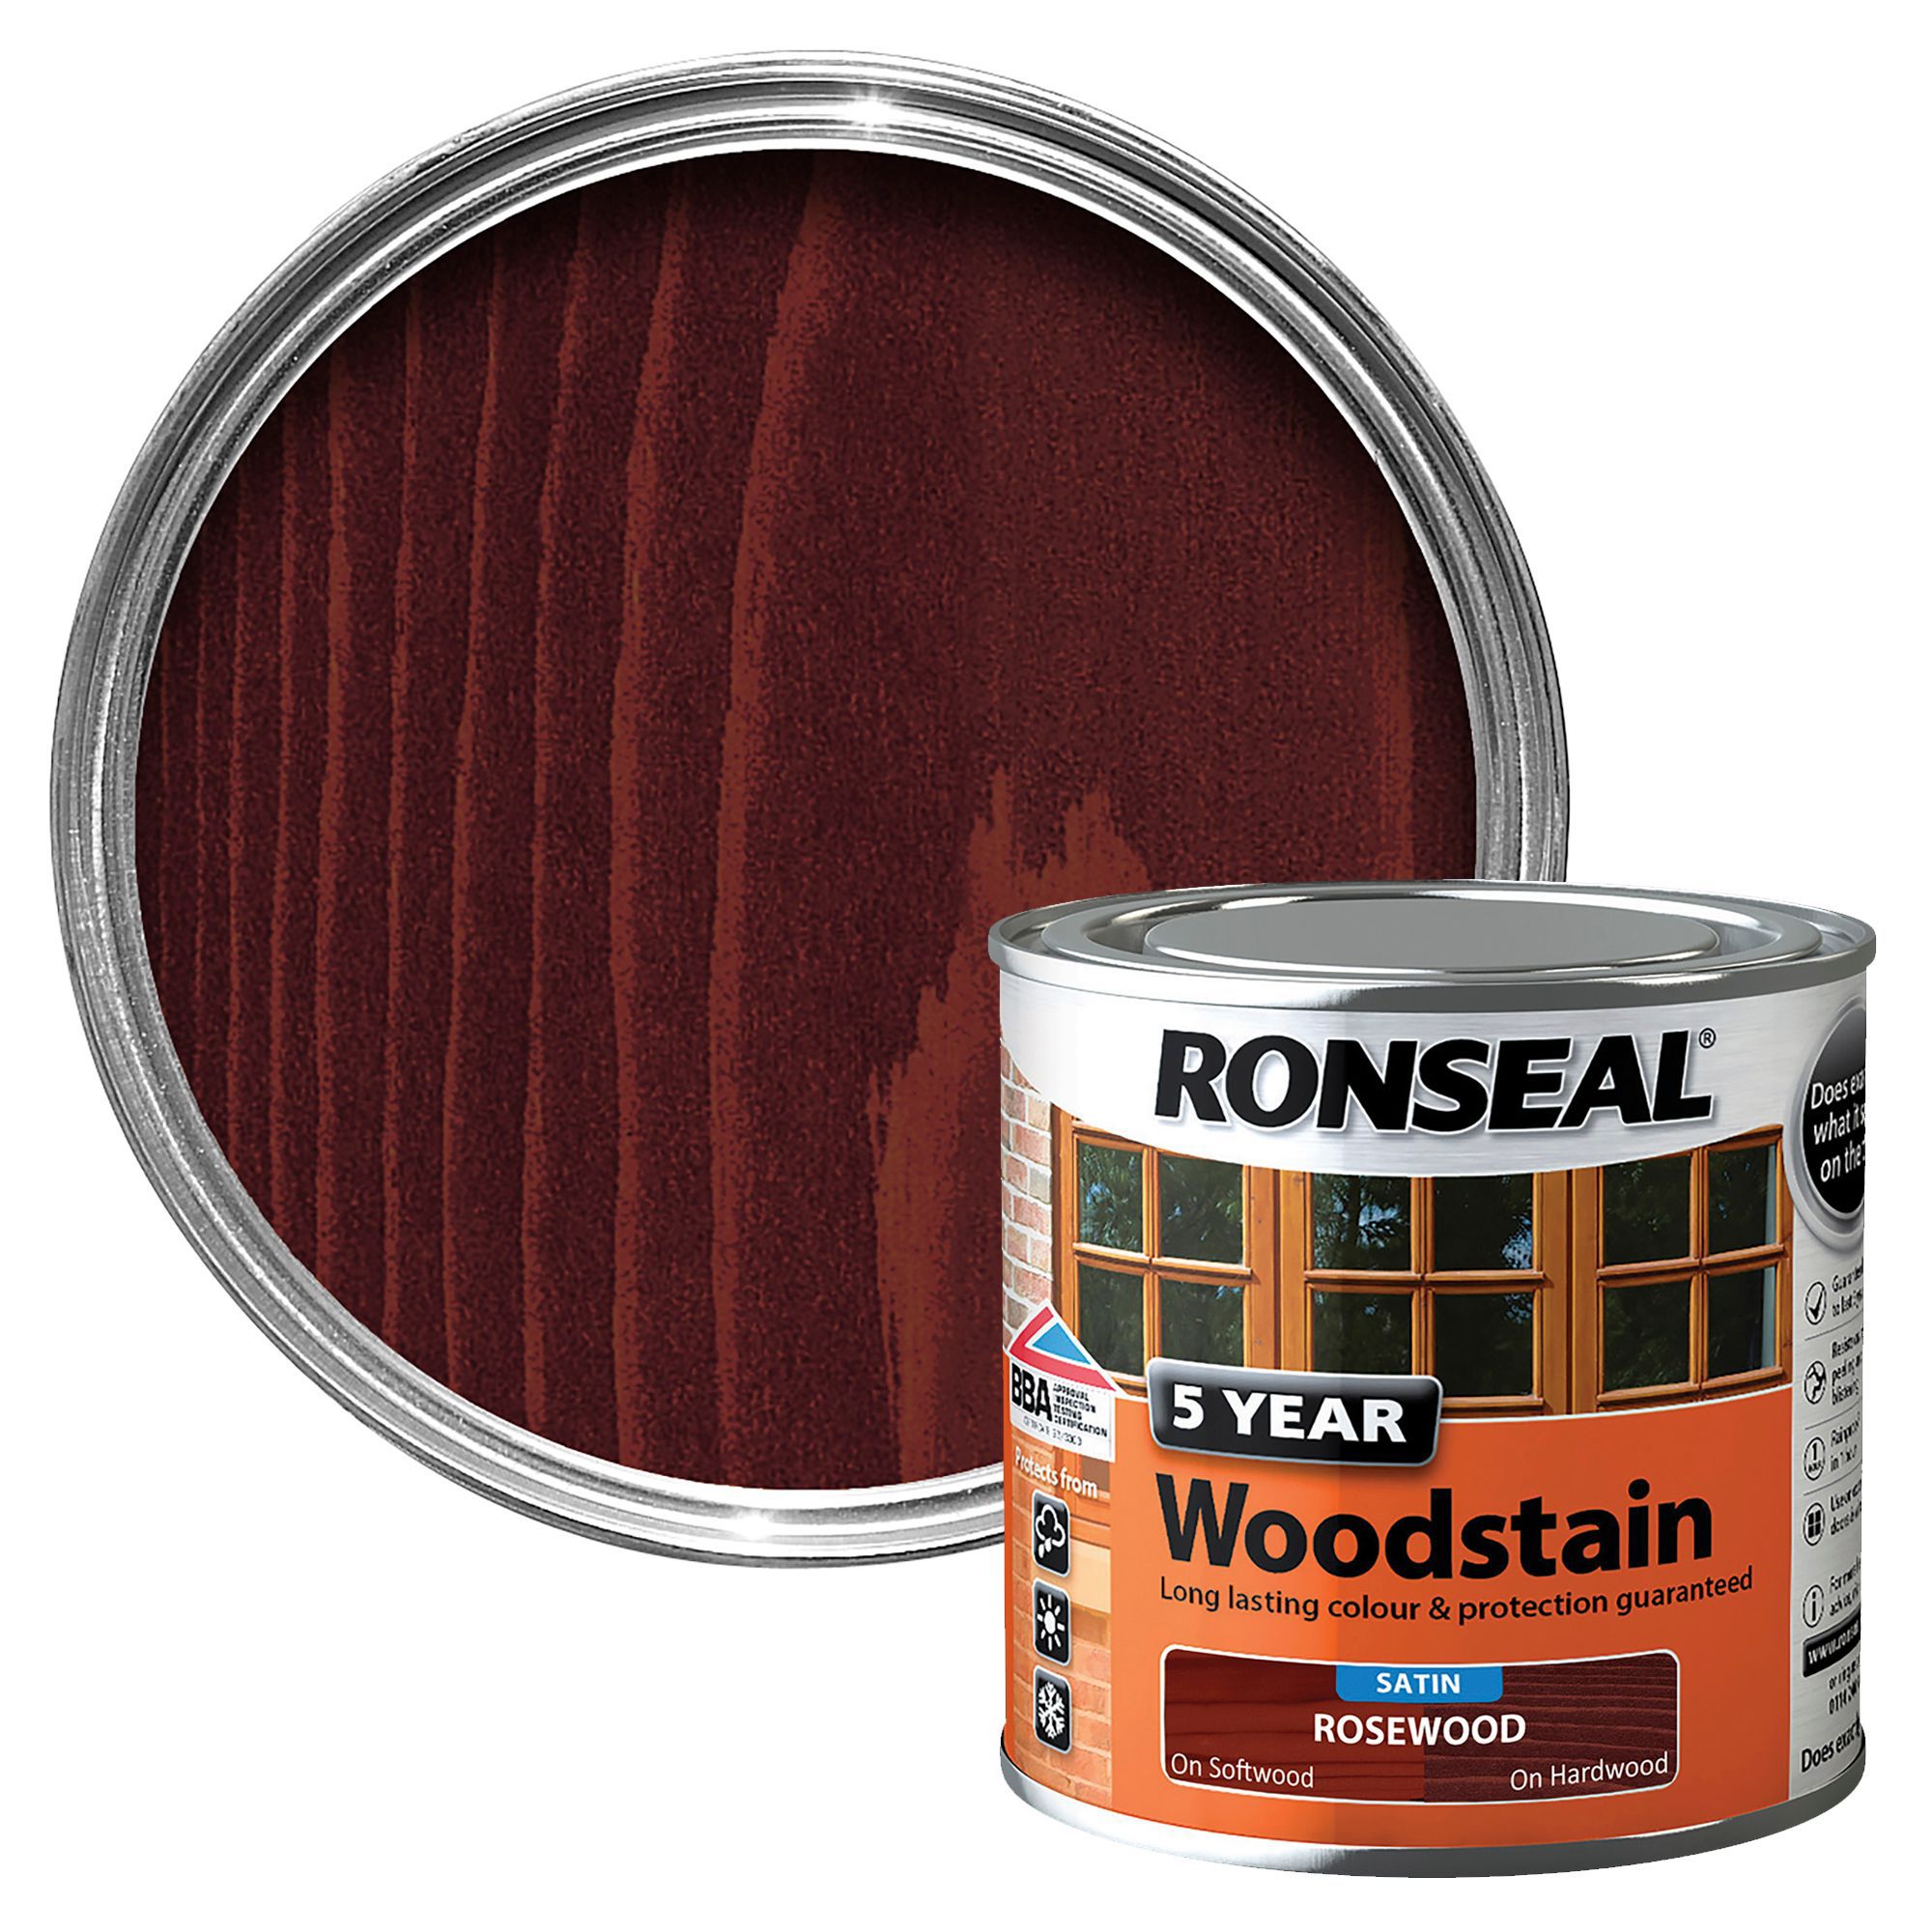 Ronseal Rosewood High satin sheen Wood stain, 250